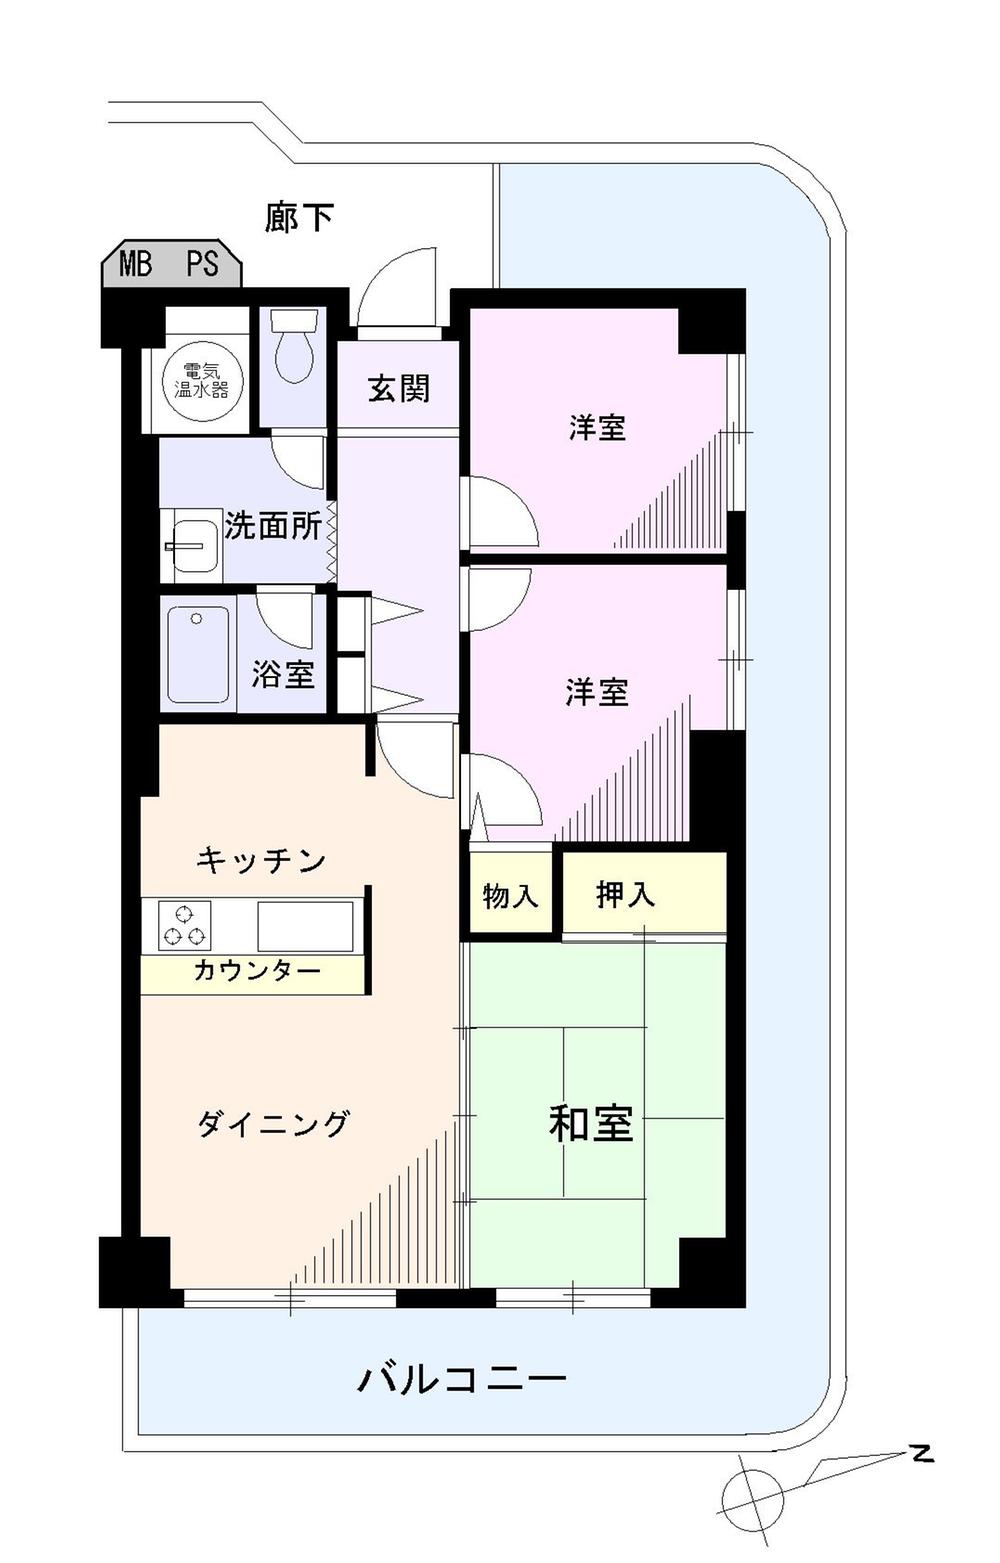 Floor plan. 3DK, Price 22,200,000 yen, Occupied area 59.61 sq m , Balcony area 24.13 sq m